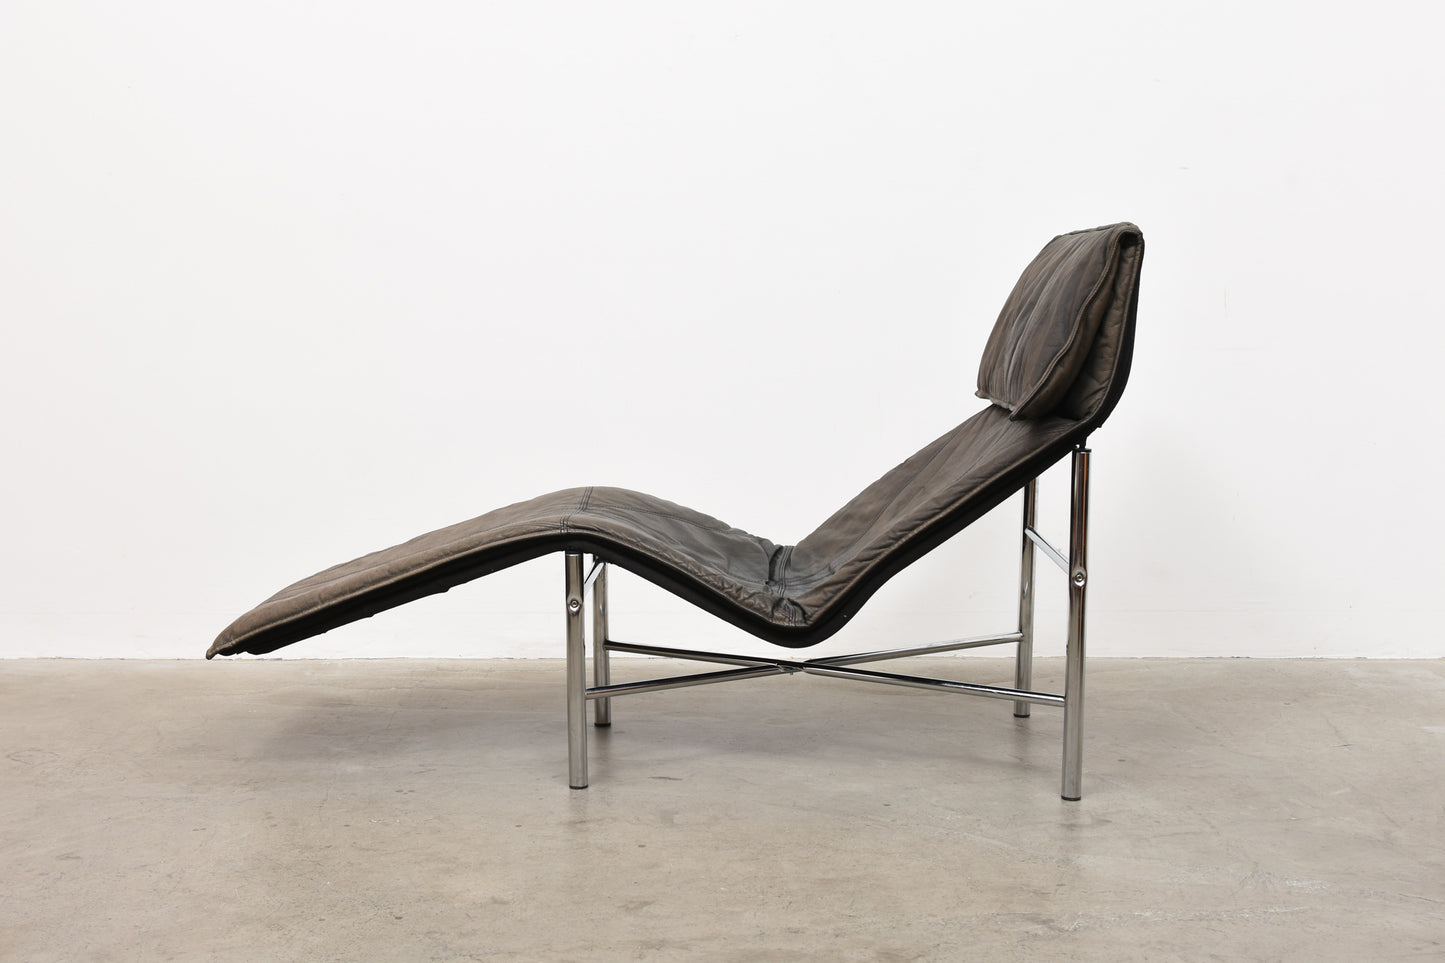 'Skye' chaise longue by Tord Björklund